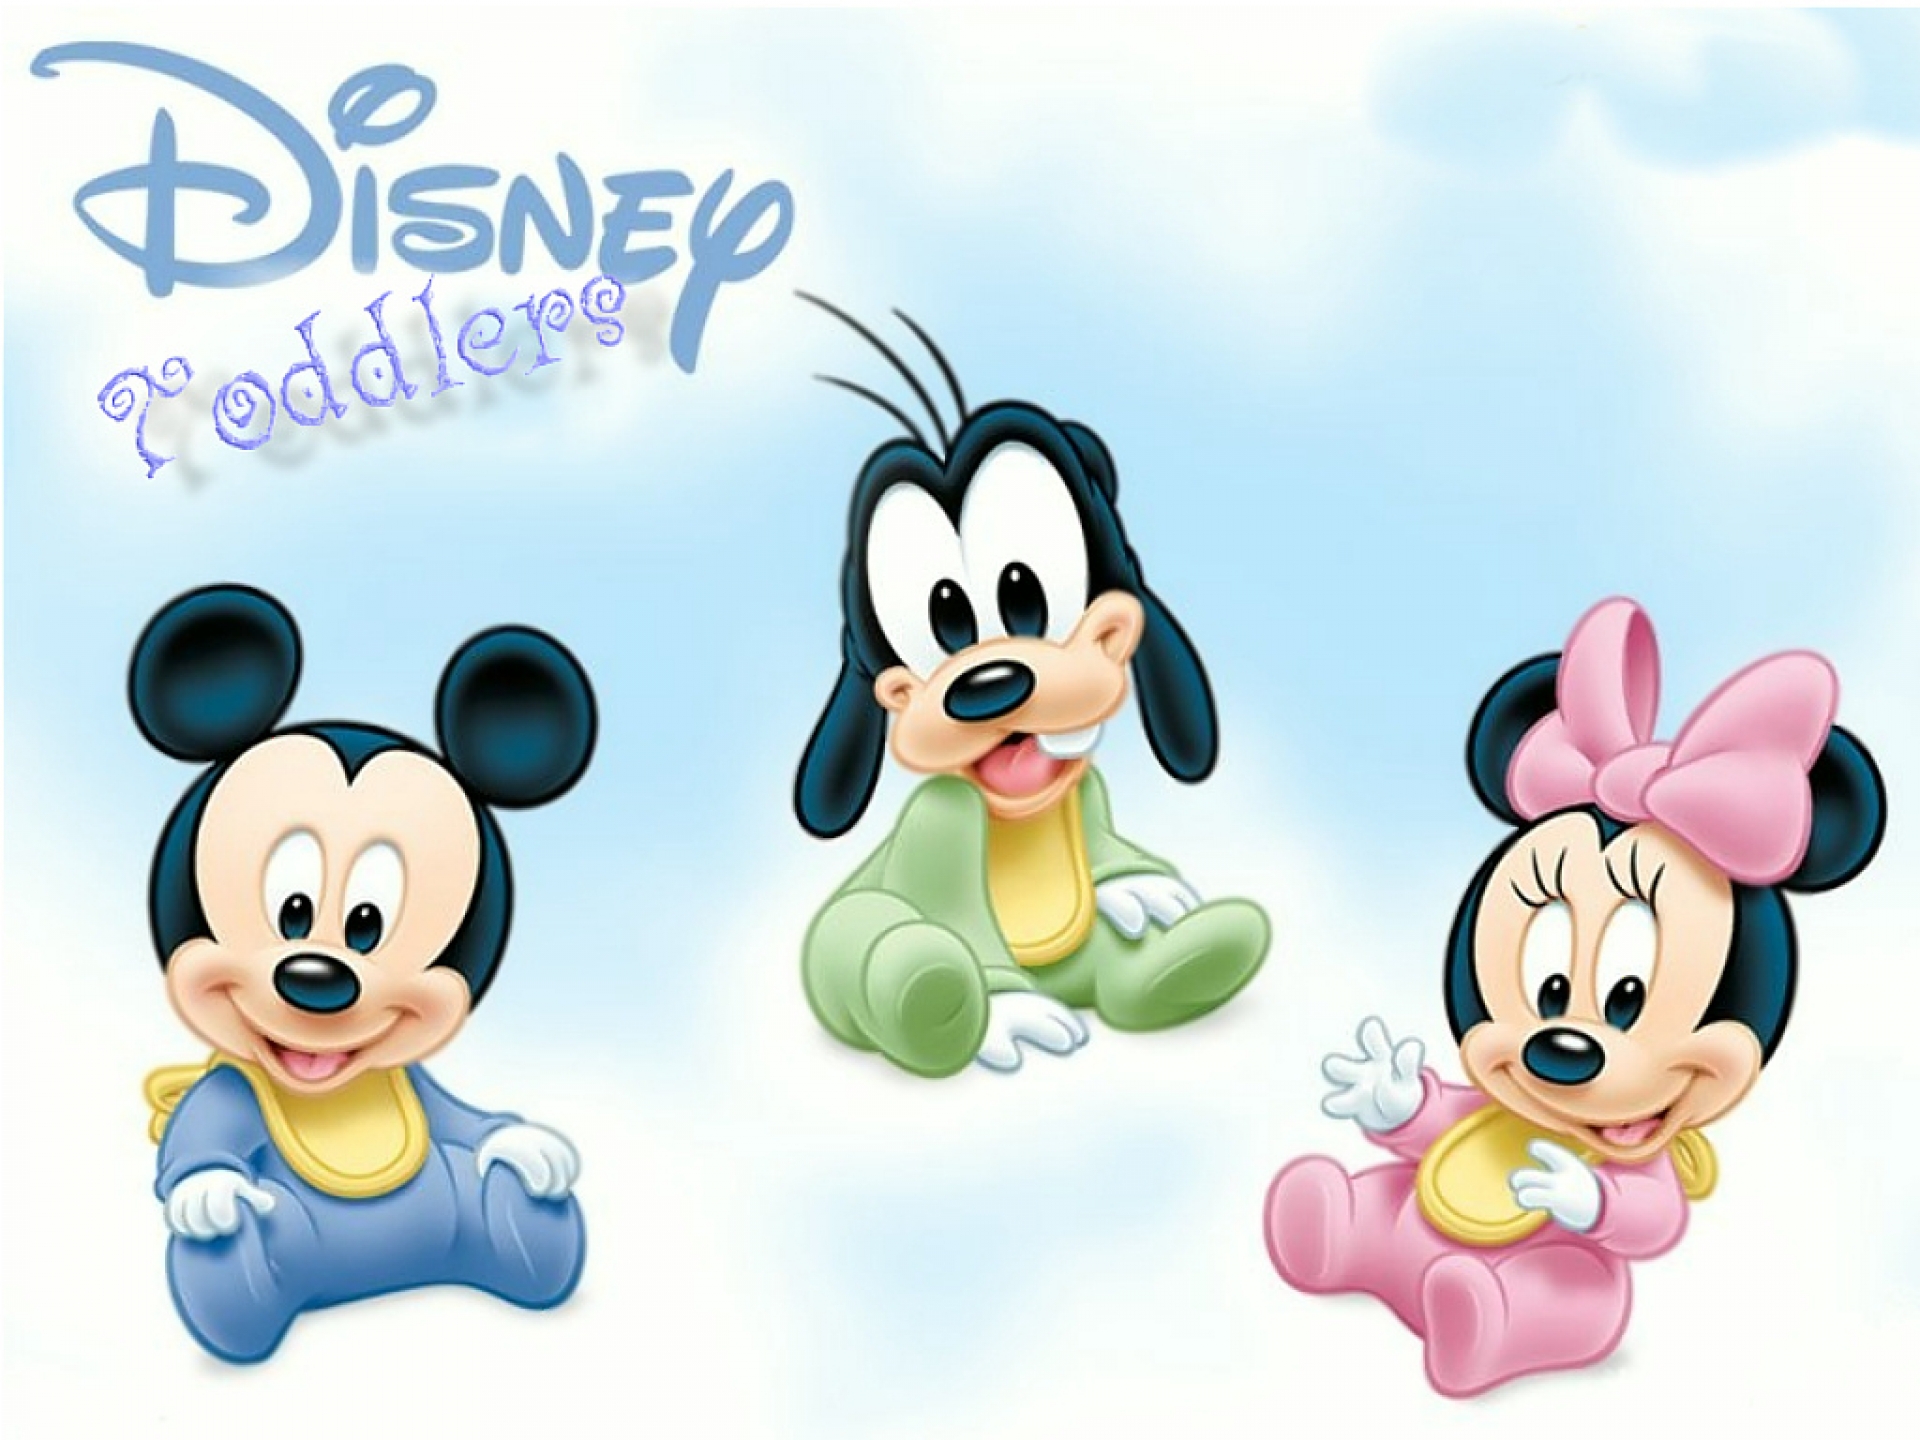 Cartoon Characters Walt Disney Wallpaper Deskt 10716 Wallpaper